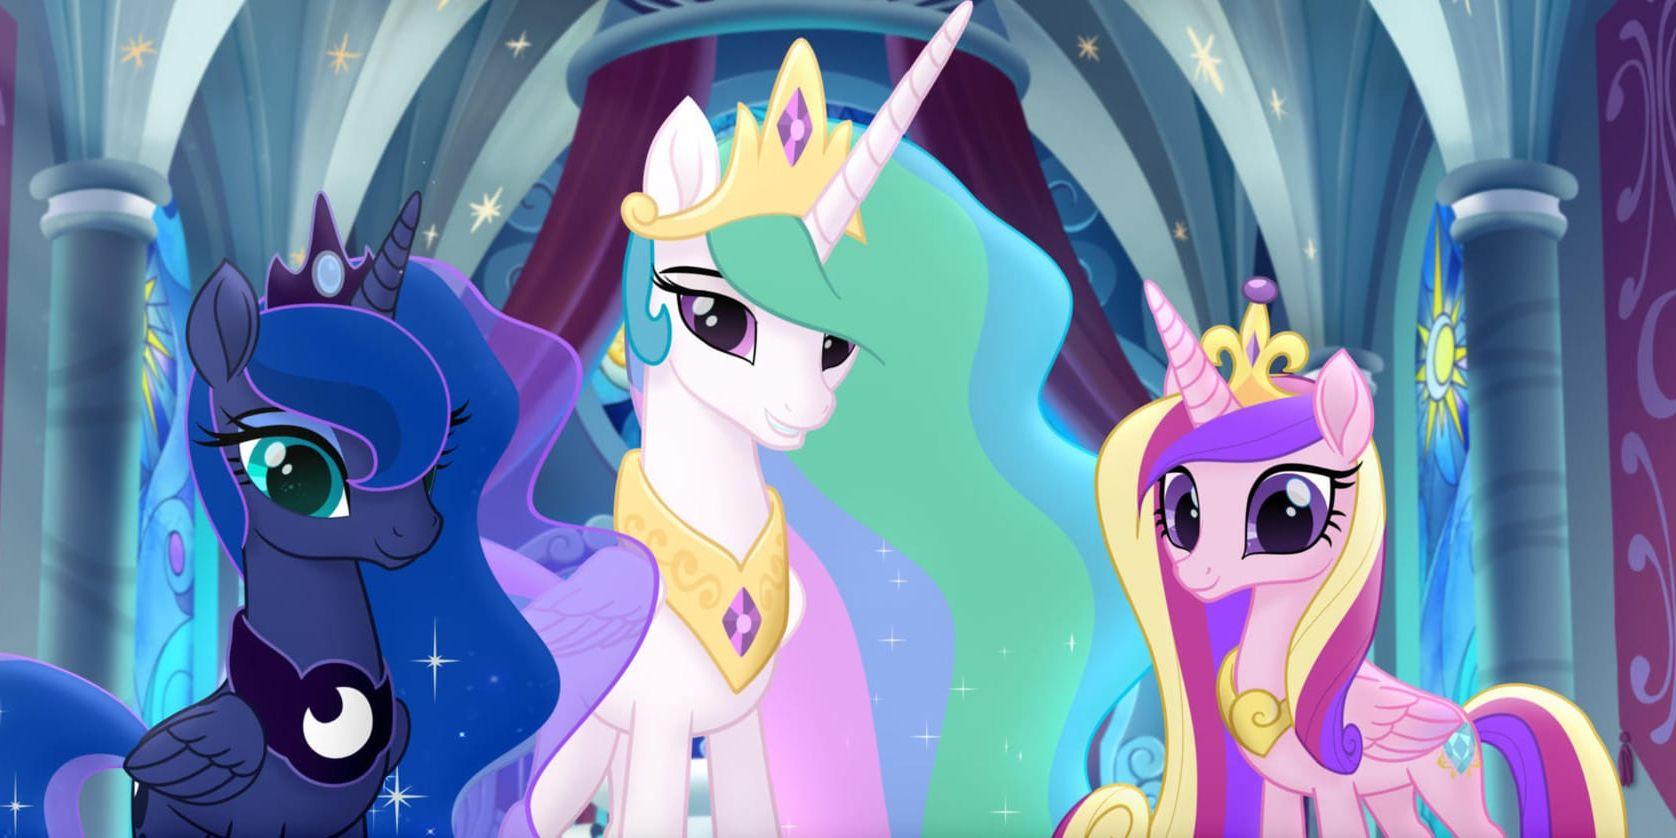 Prinsessan Luna, Prinsessan Celestia och Prinsessan Cadence i "My little pony"-filmen. Pressbild.